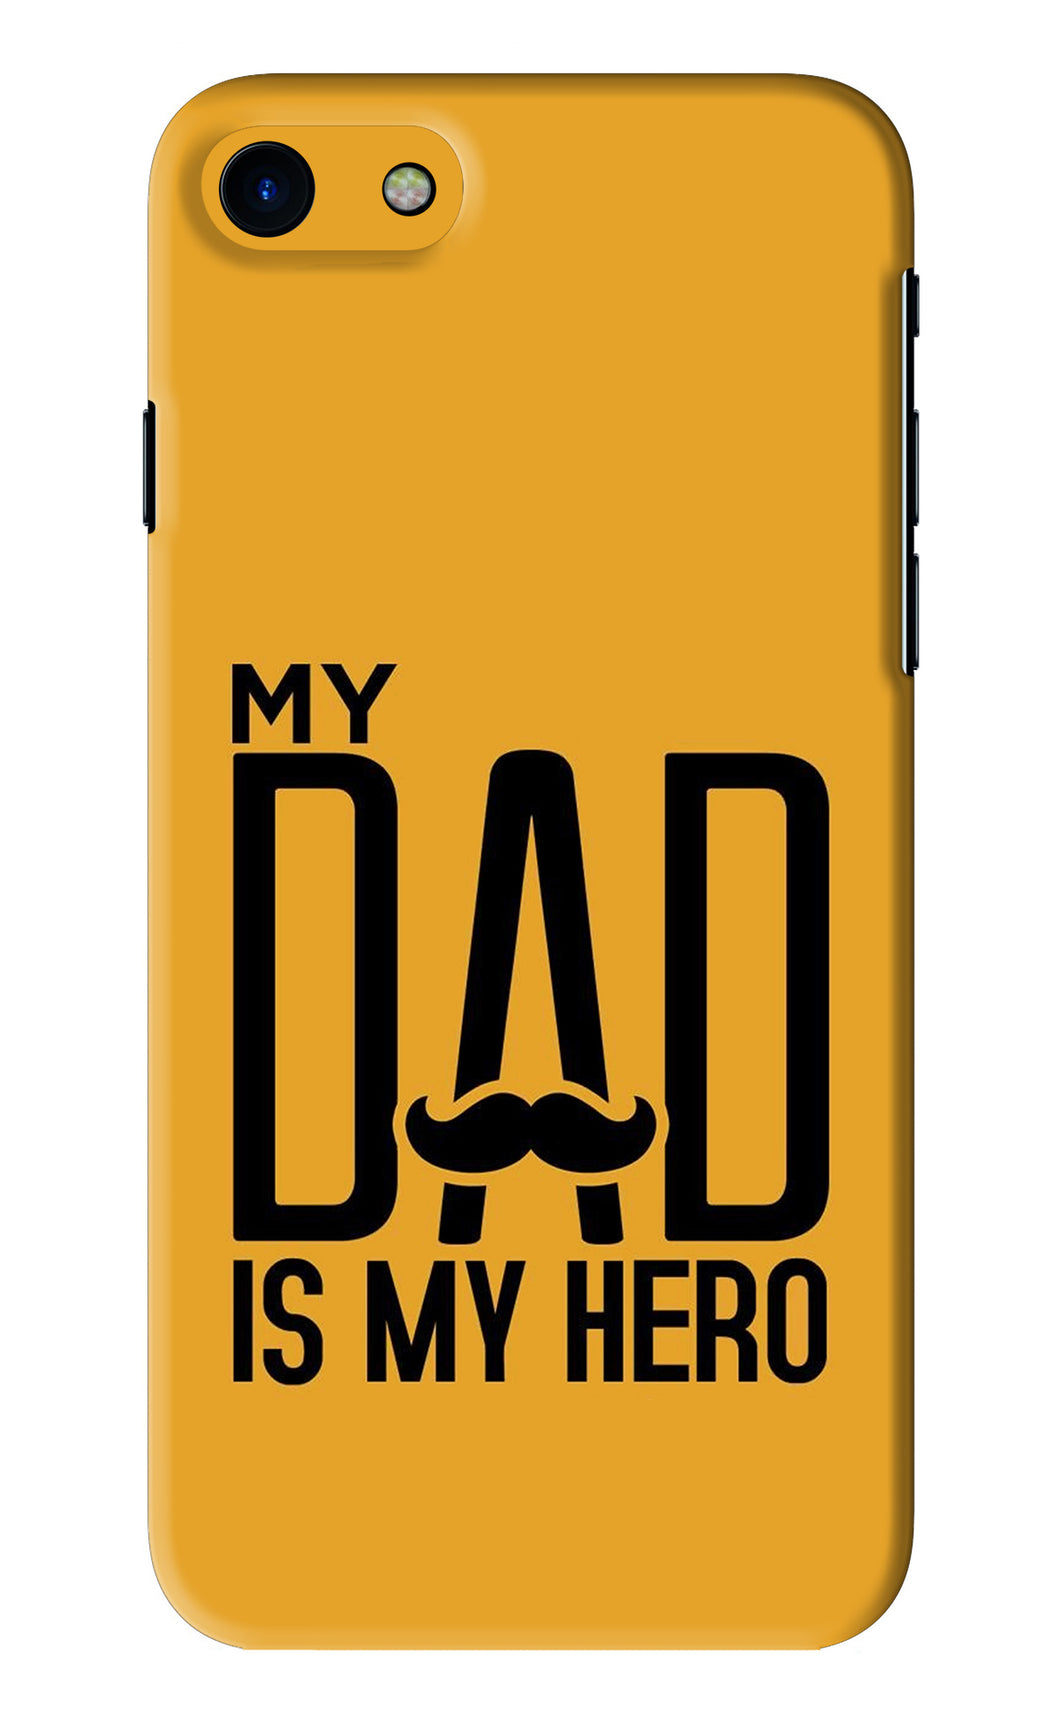 My Dad Is My Hero iPhone SE 2020 Back Skin Wrap